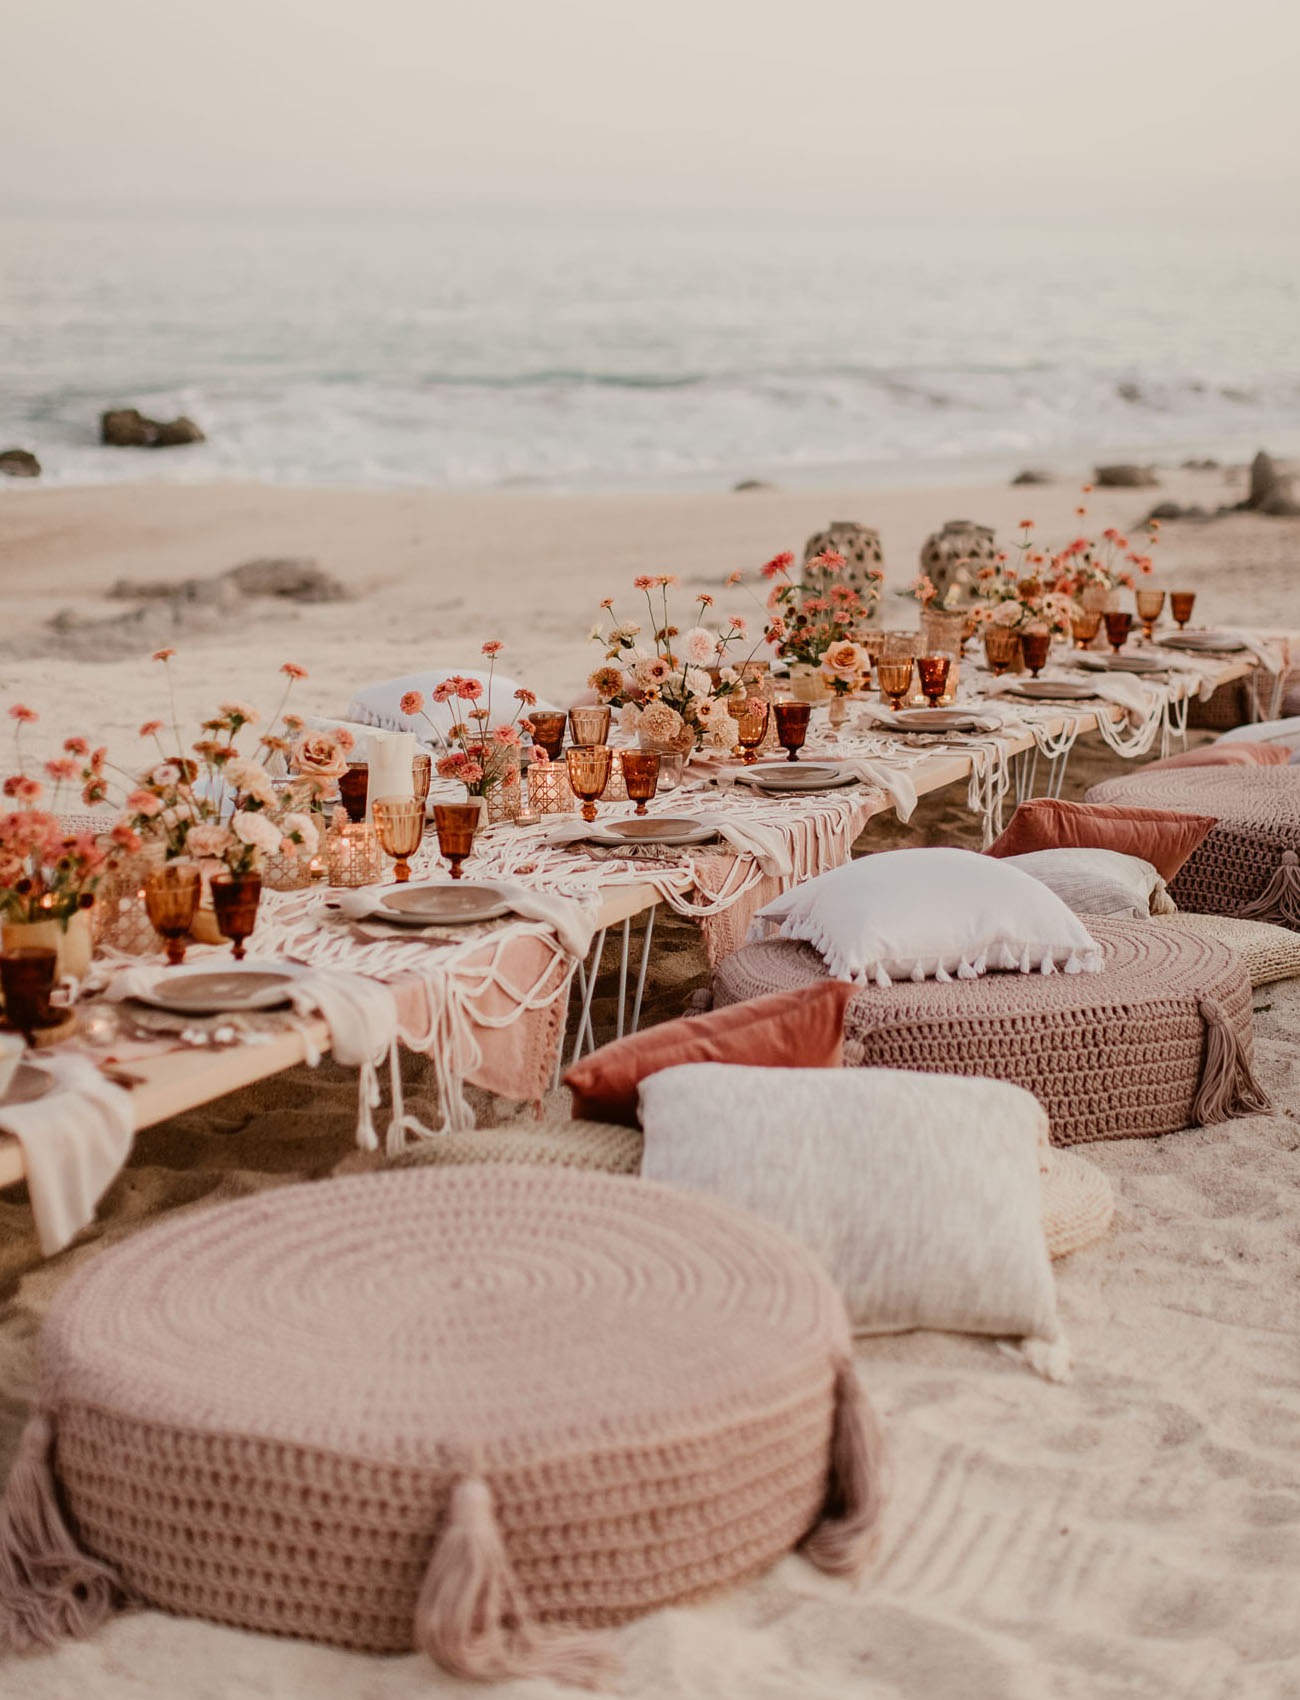 picnic style dinner reception on a tropical beach destination wedding ideas